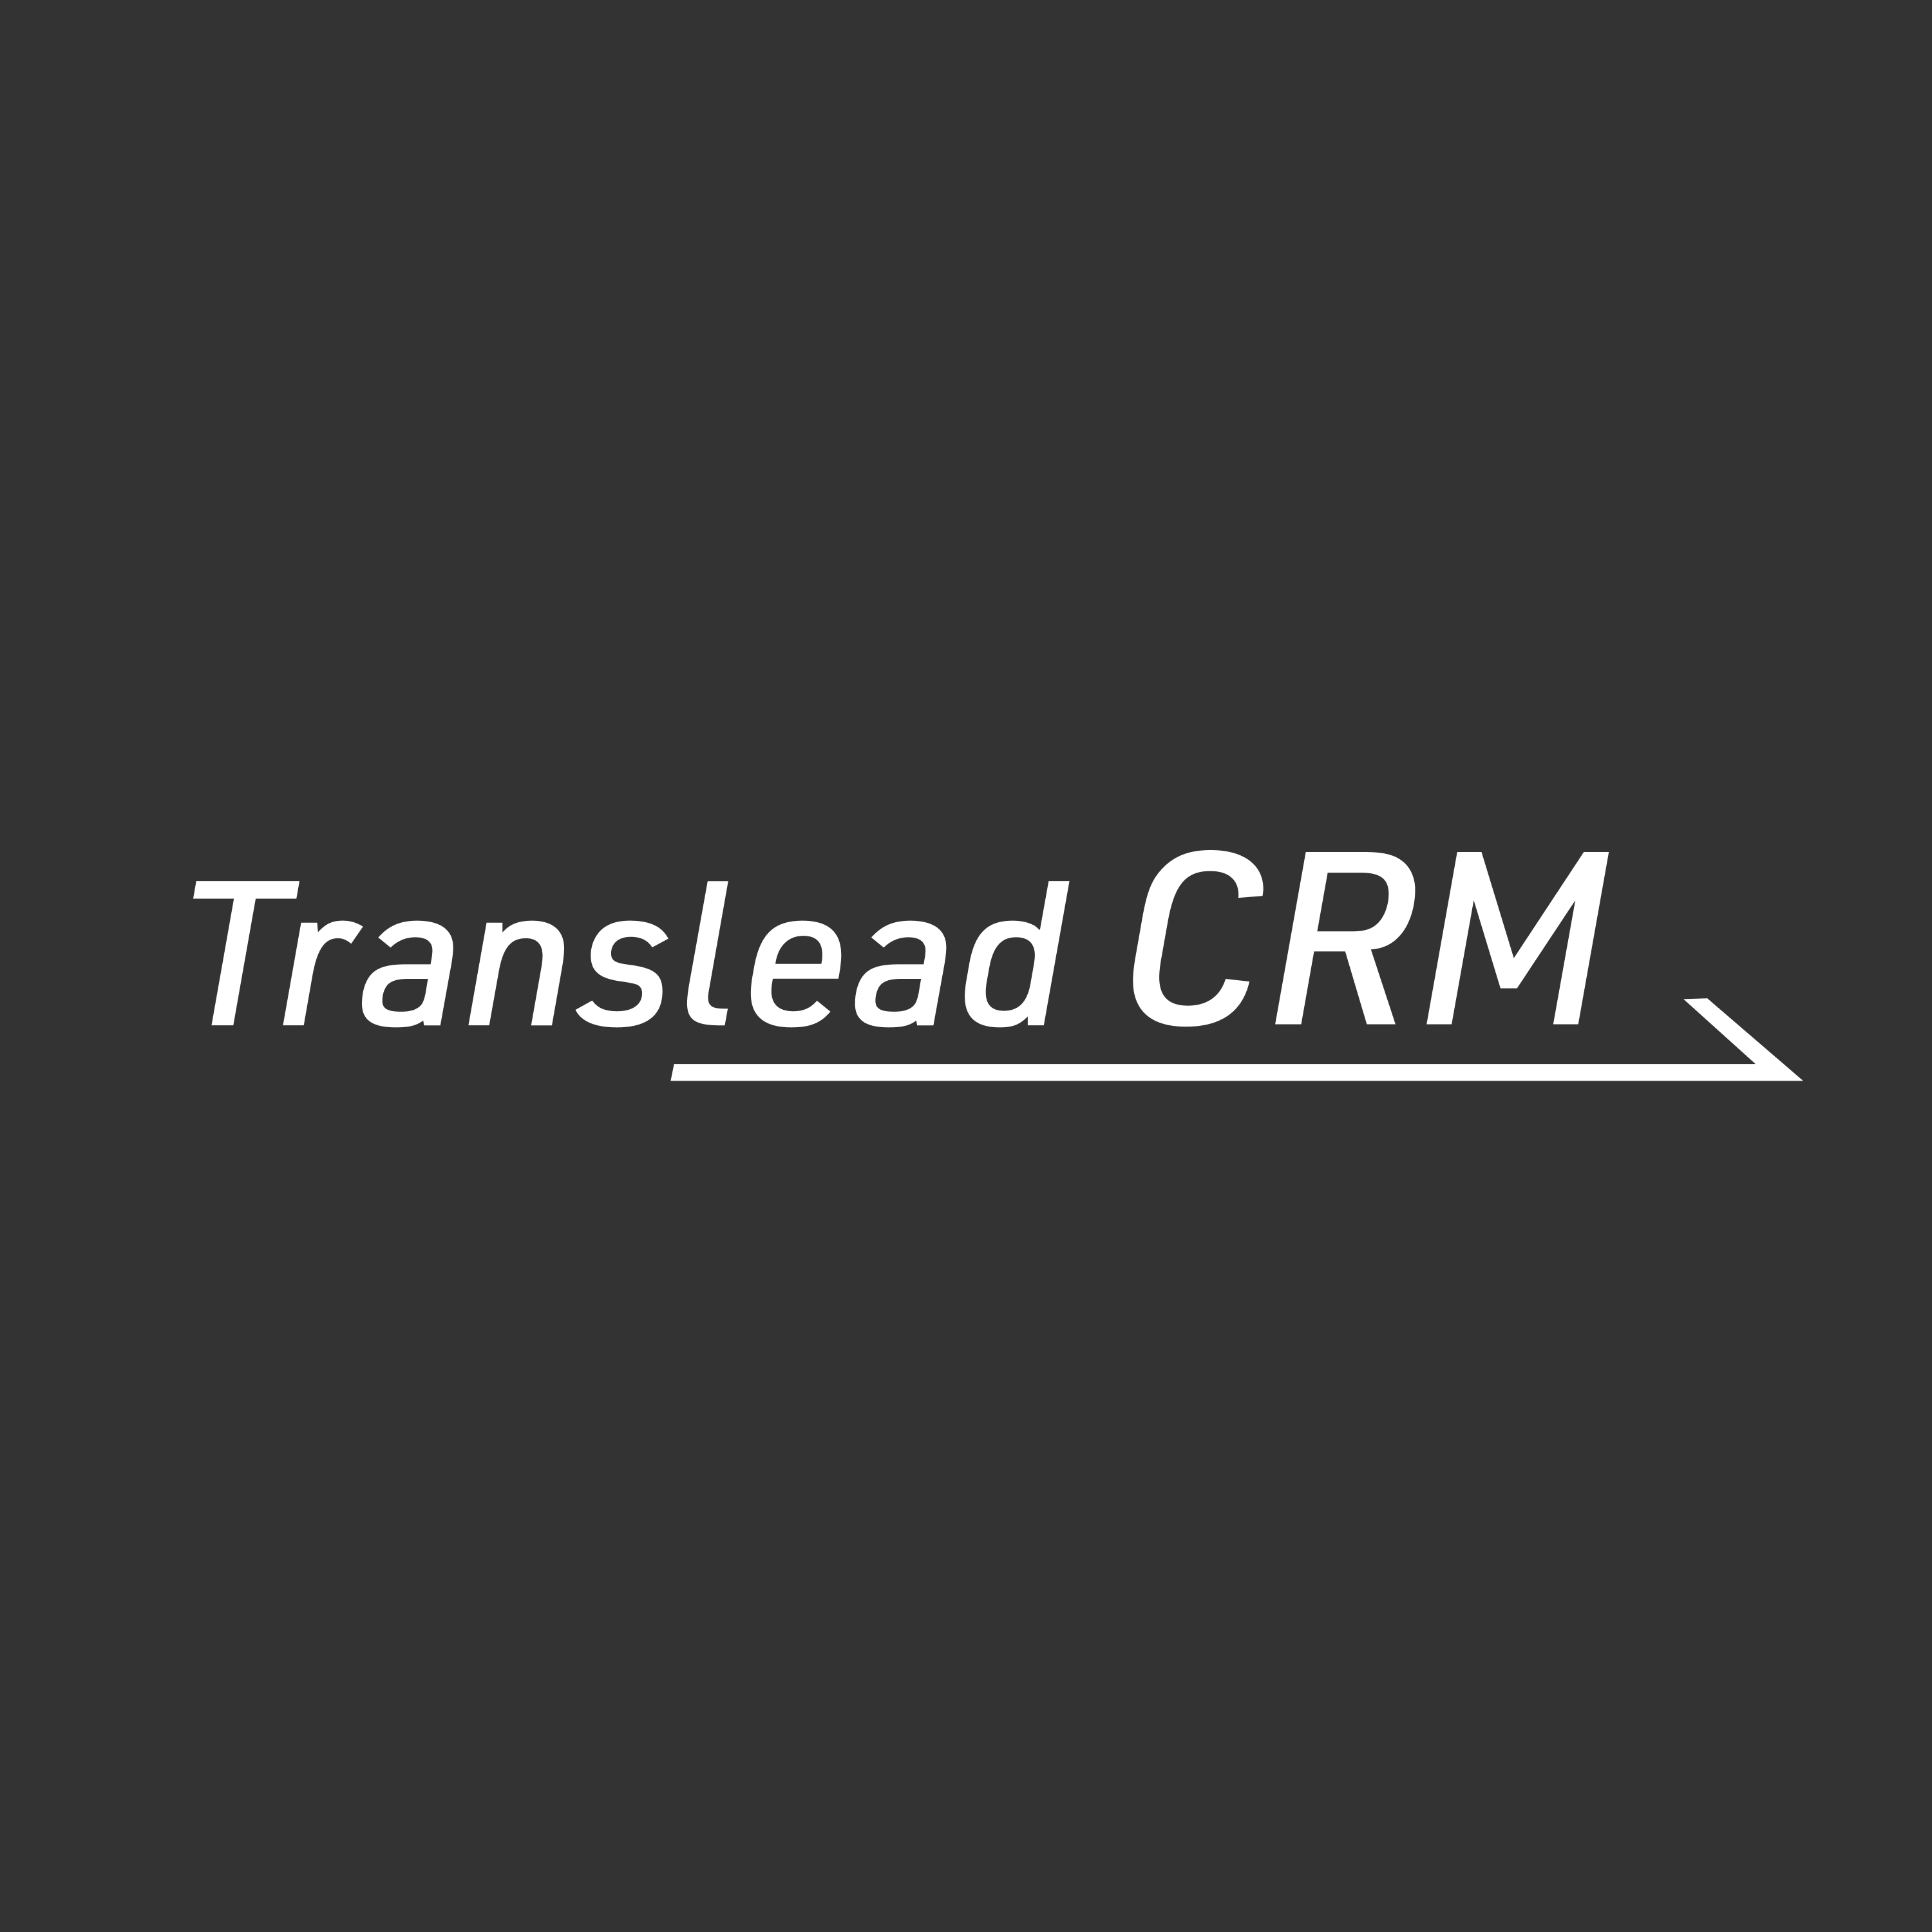 Translead CRM